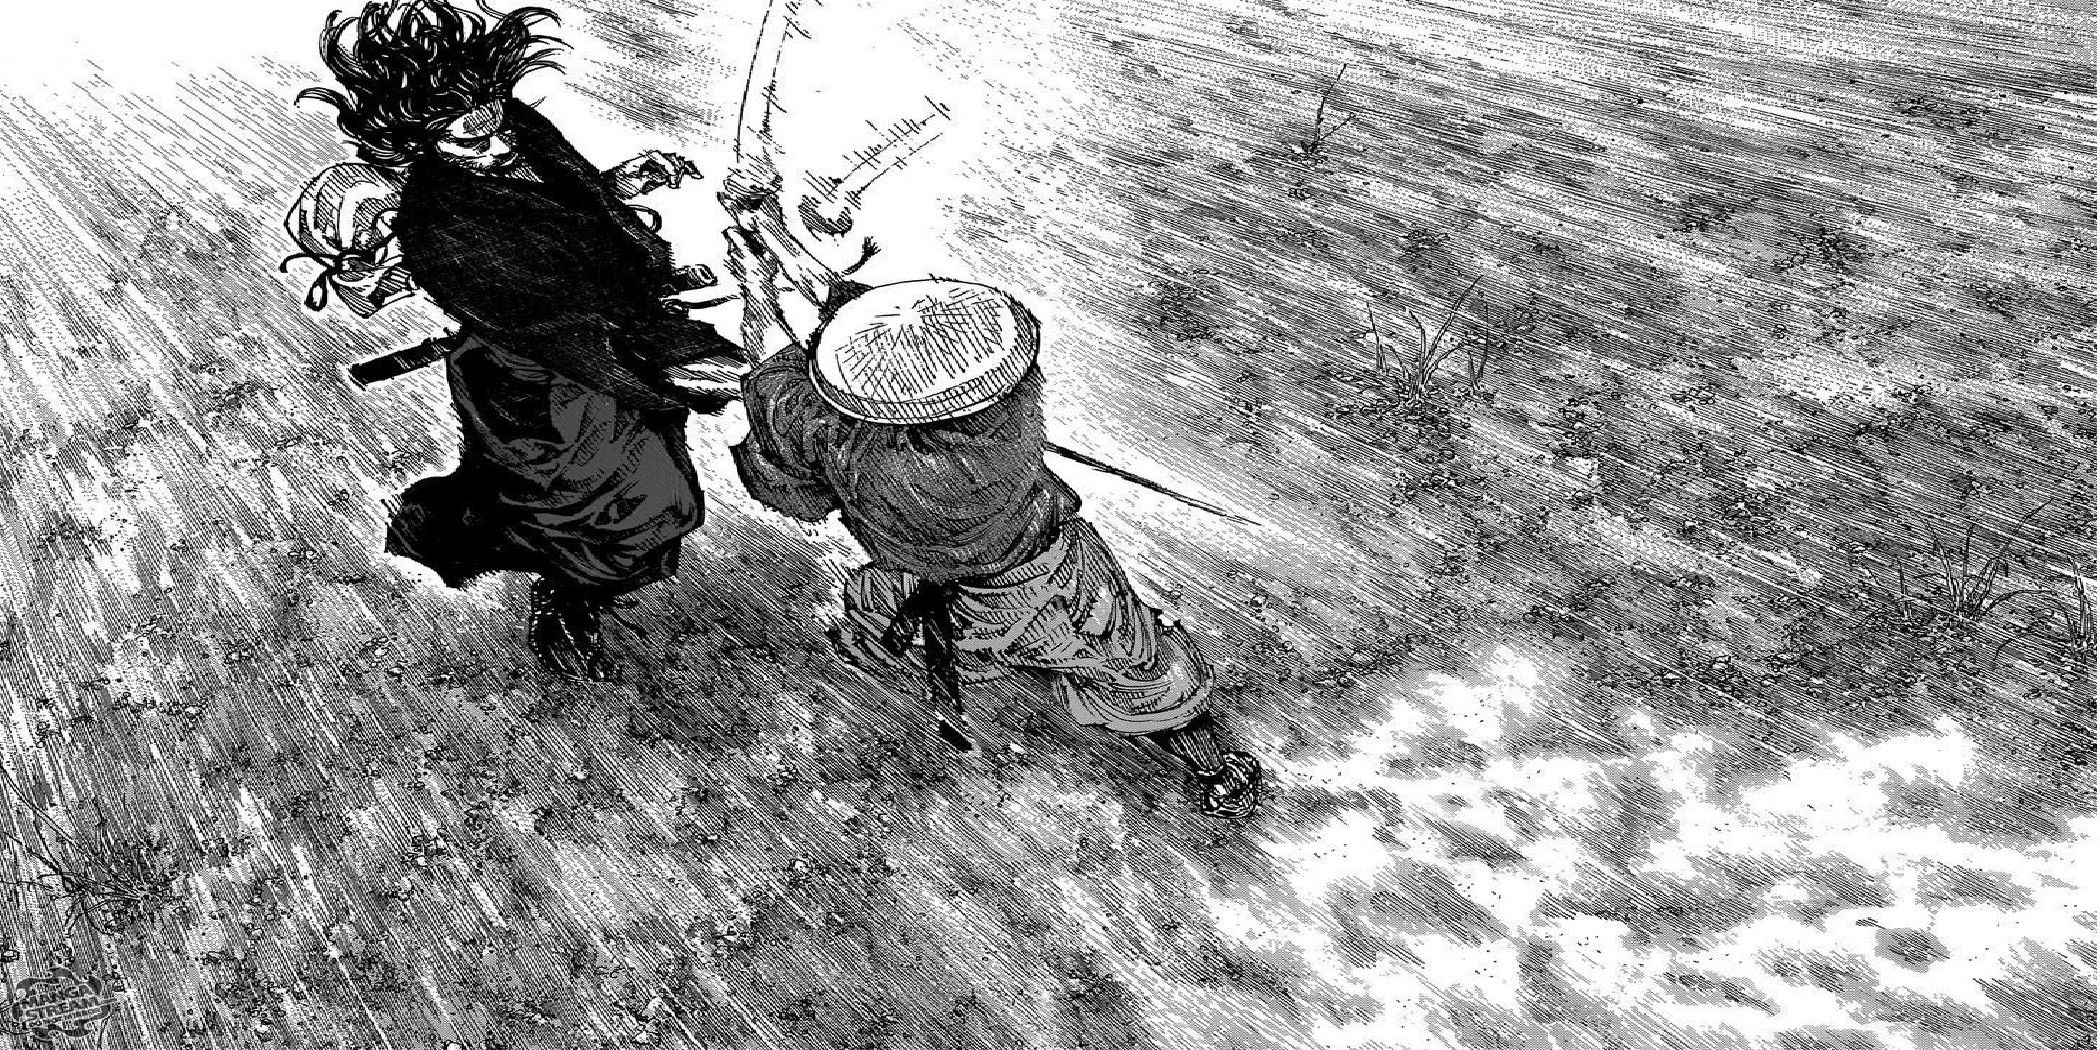 Vagabond manga panel spread depicting a sword fight.